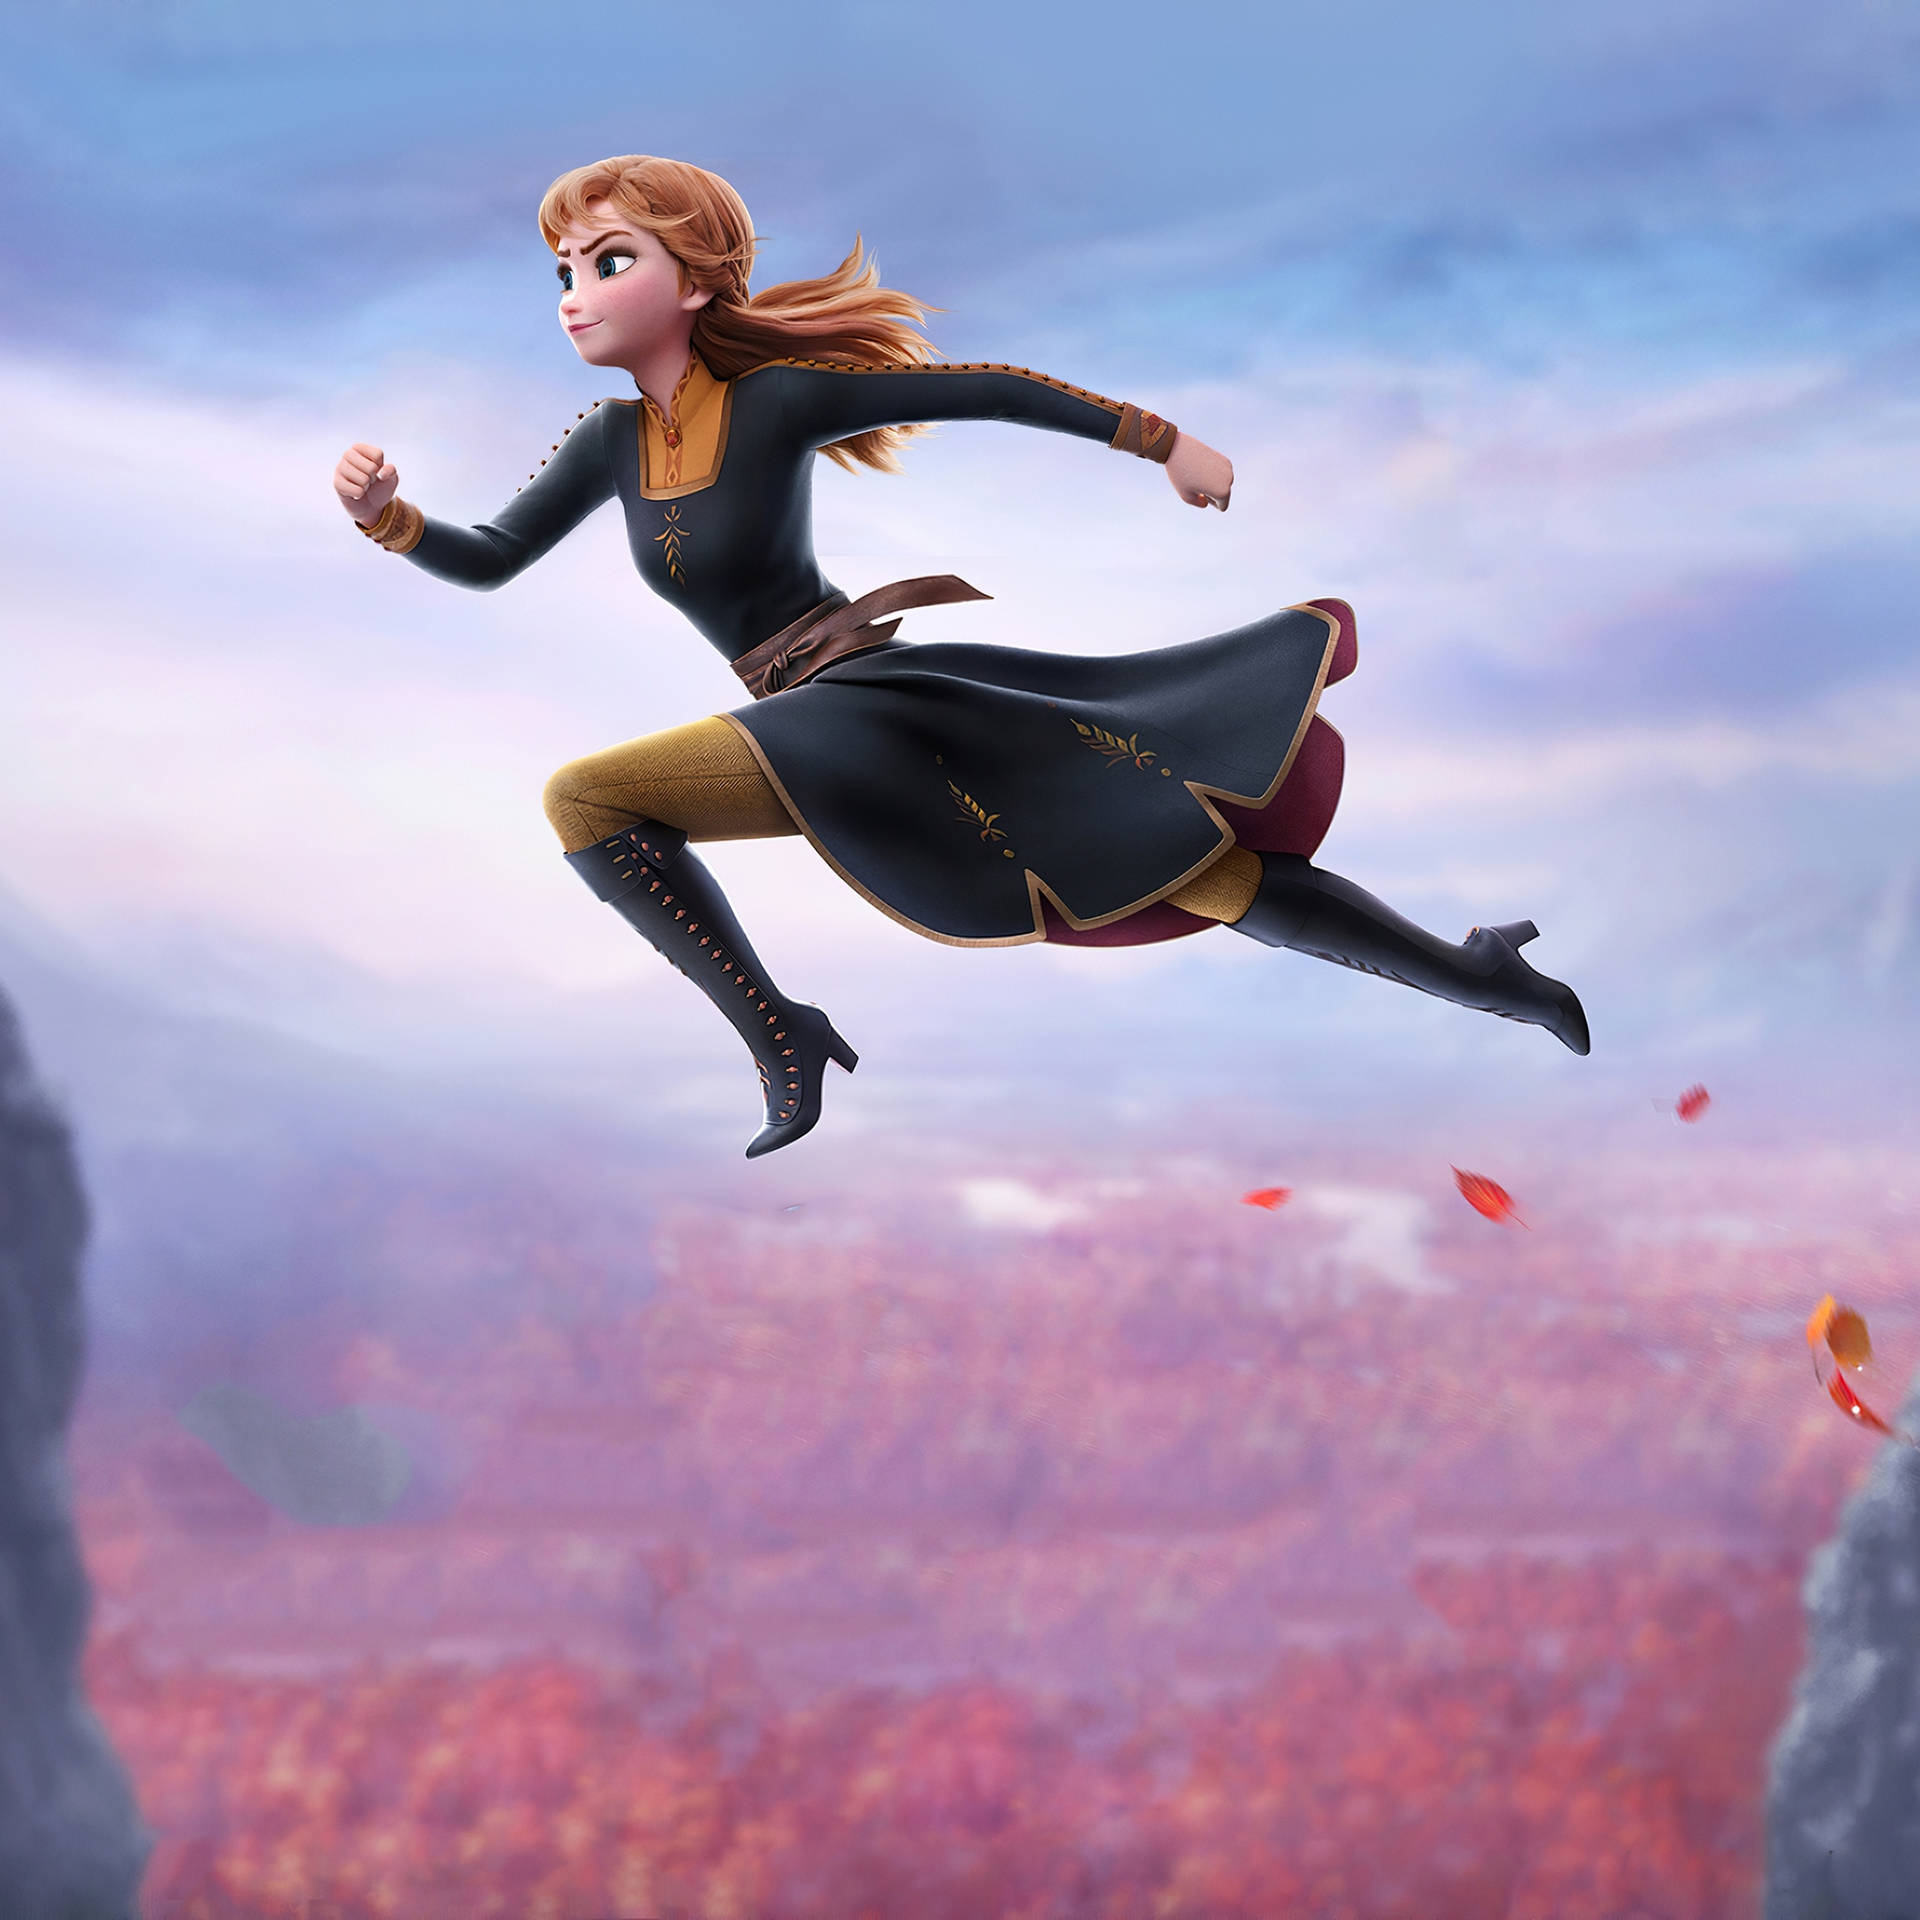 Disney Princess Anna Jumping